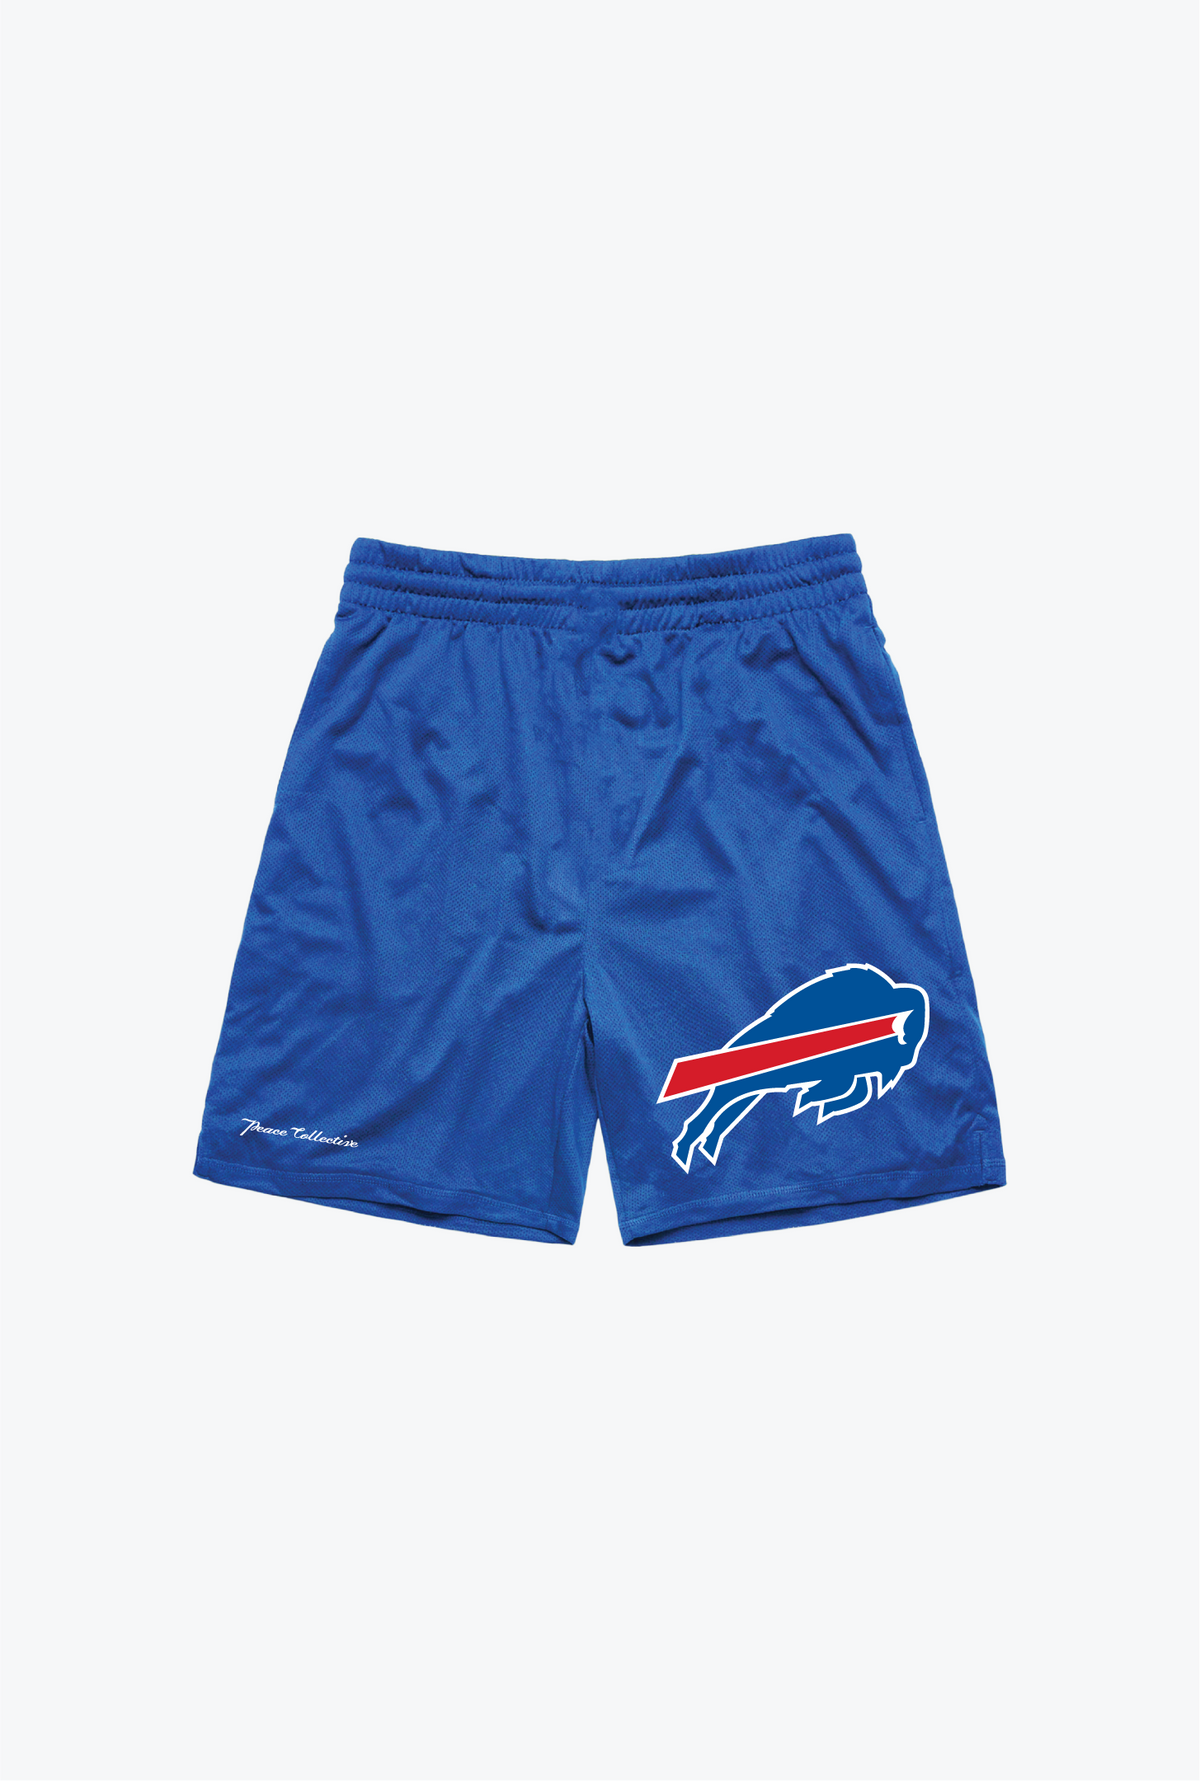 Buffalo Bills Mesh Shorts - Blue